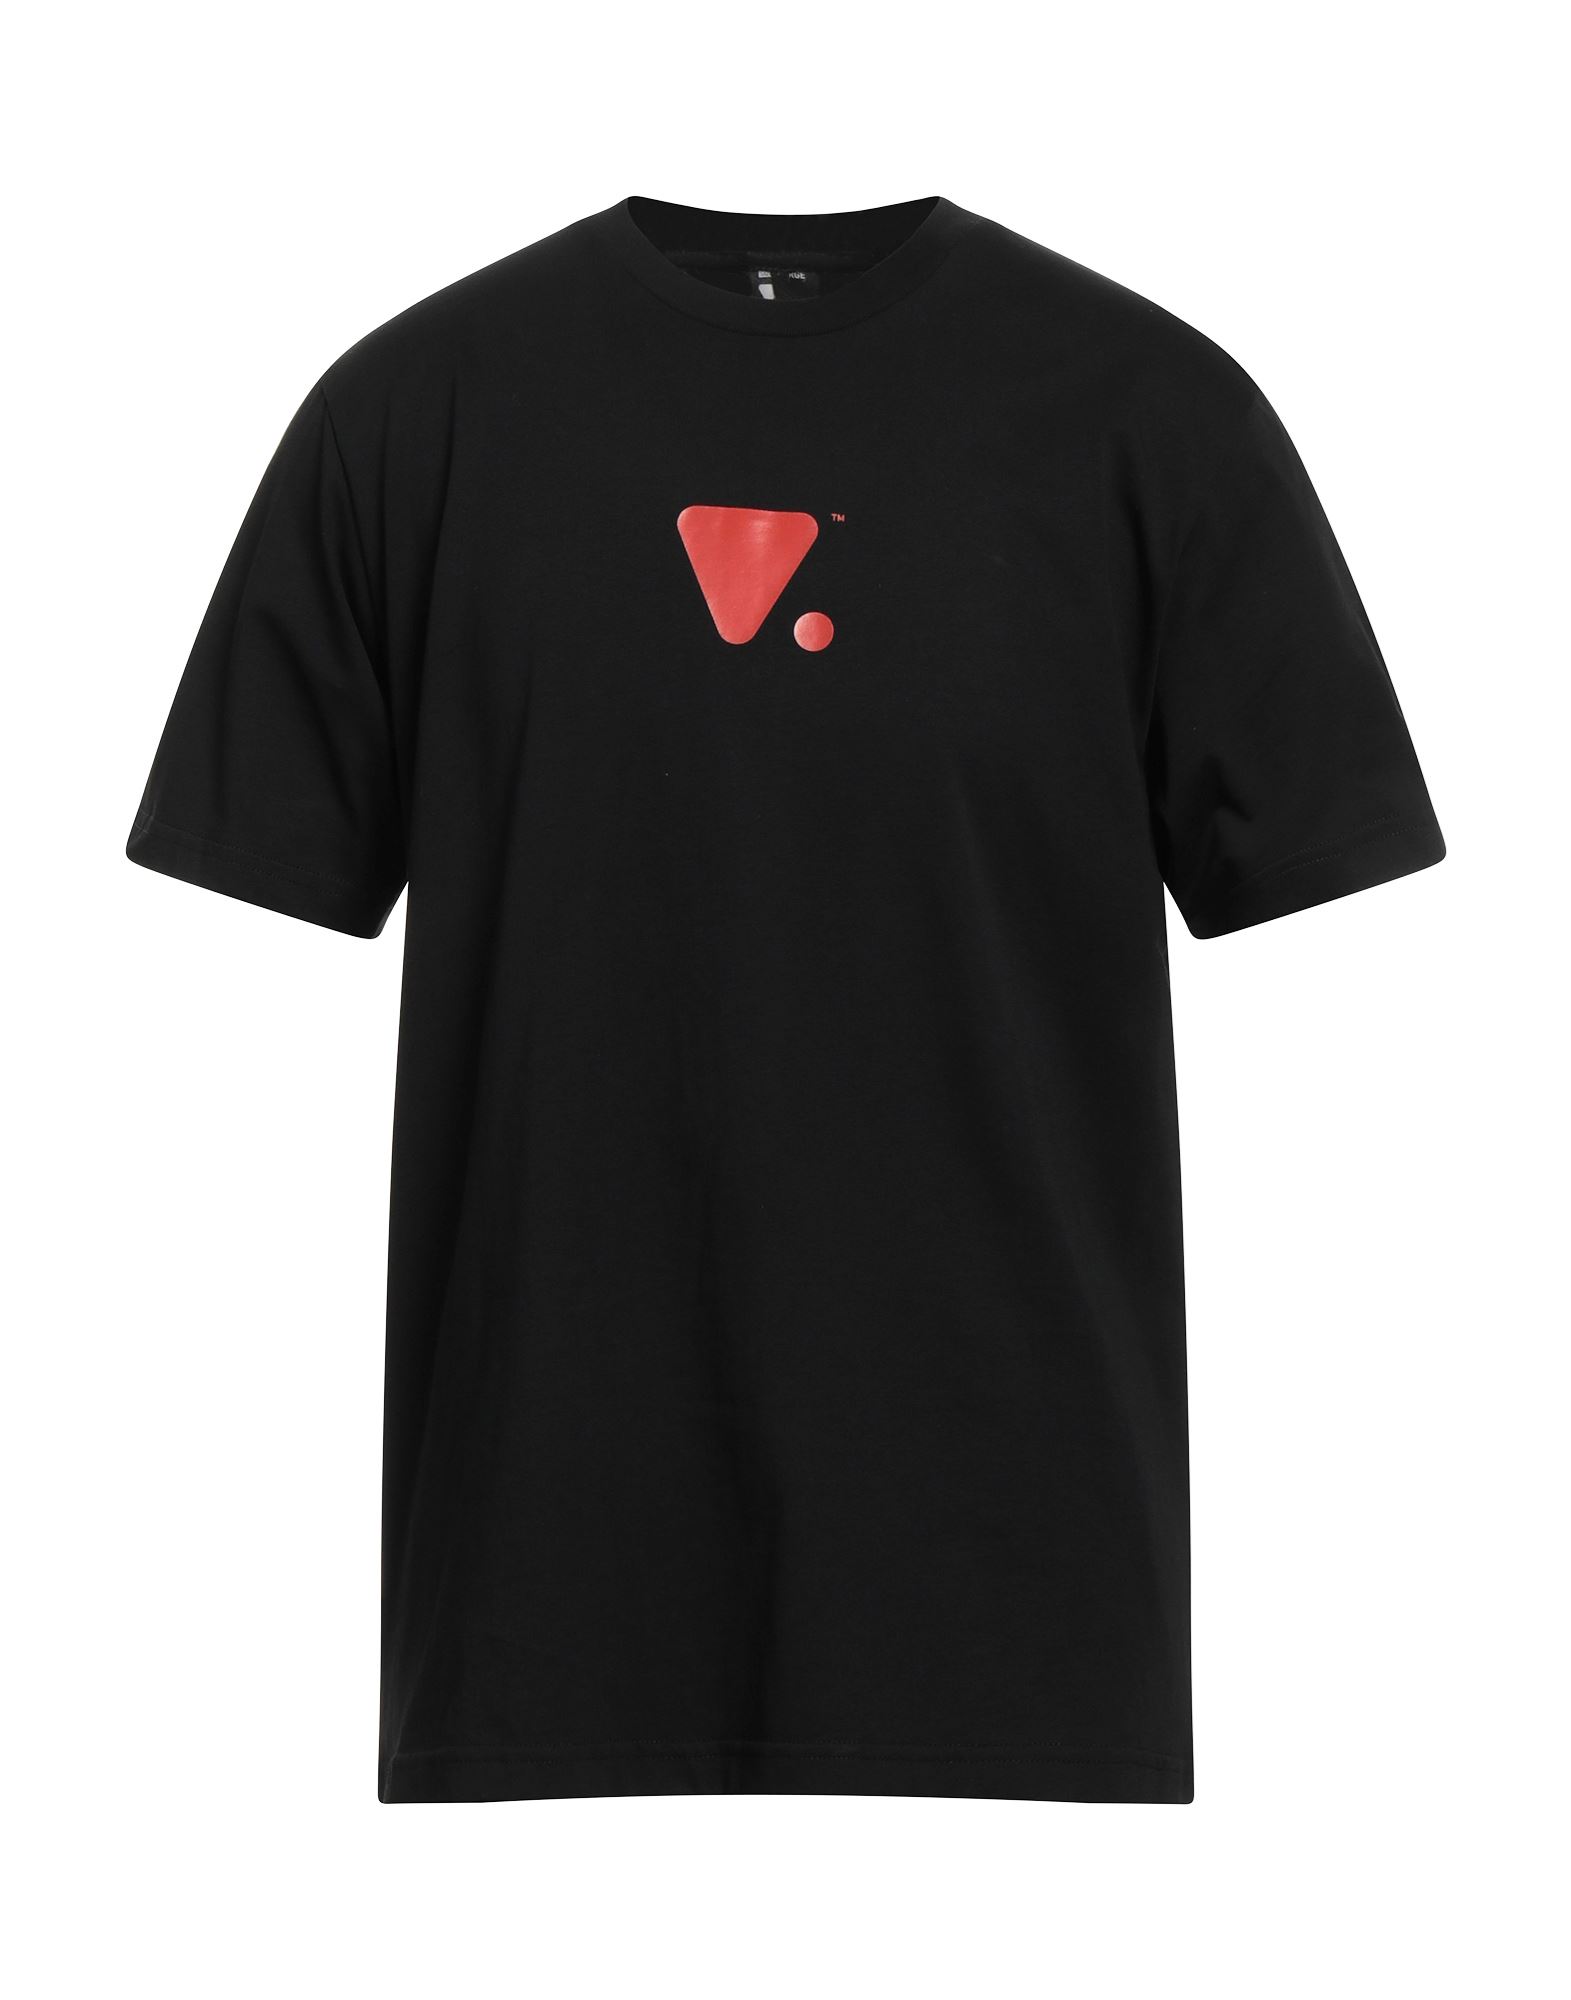 Valvola. T-shirts In Black